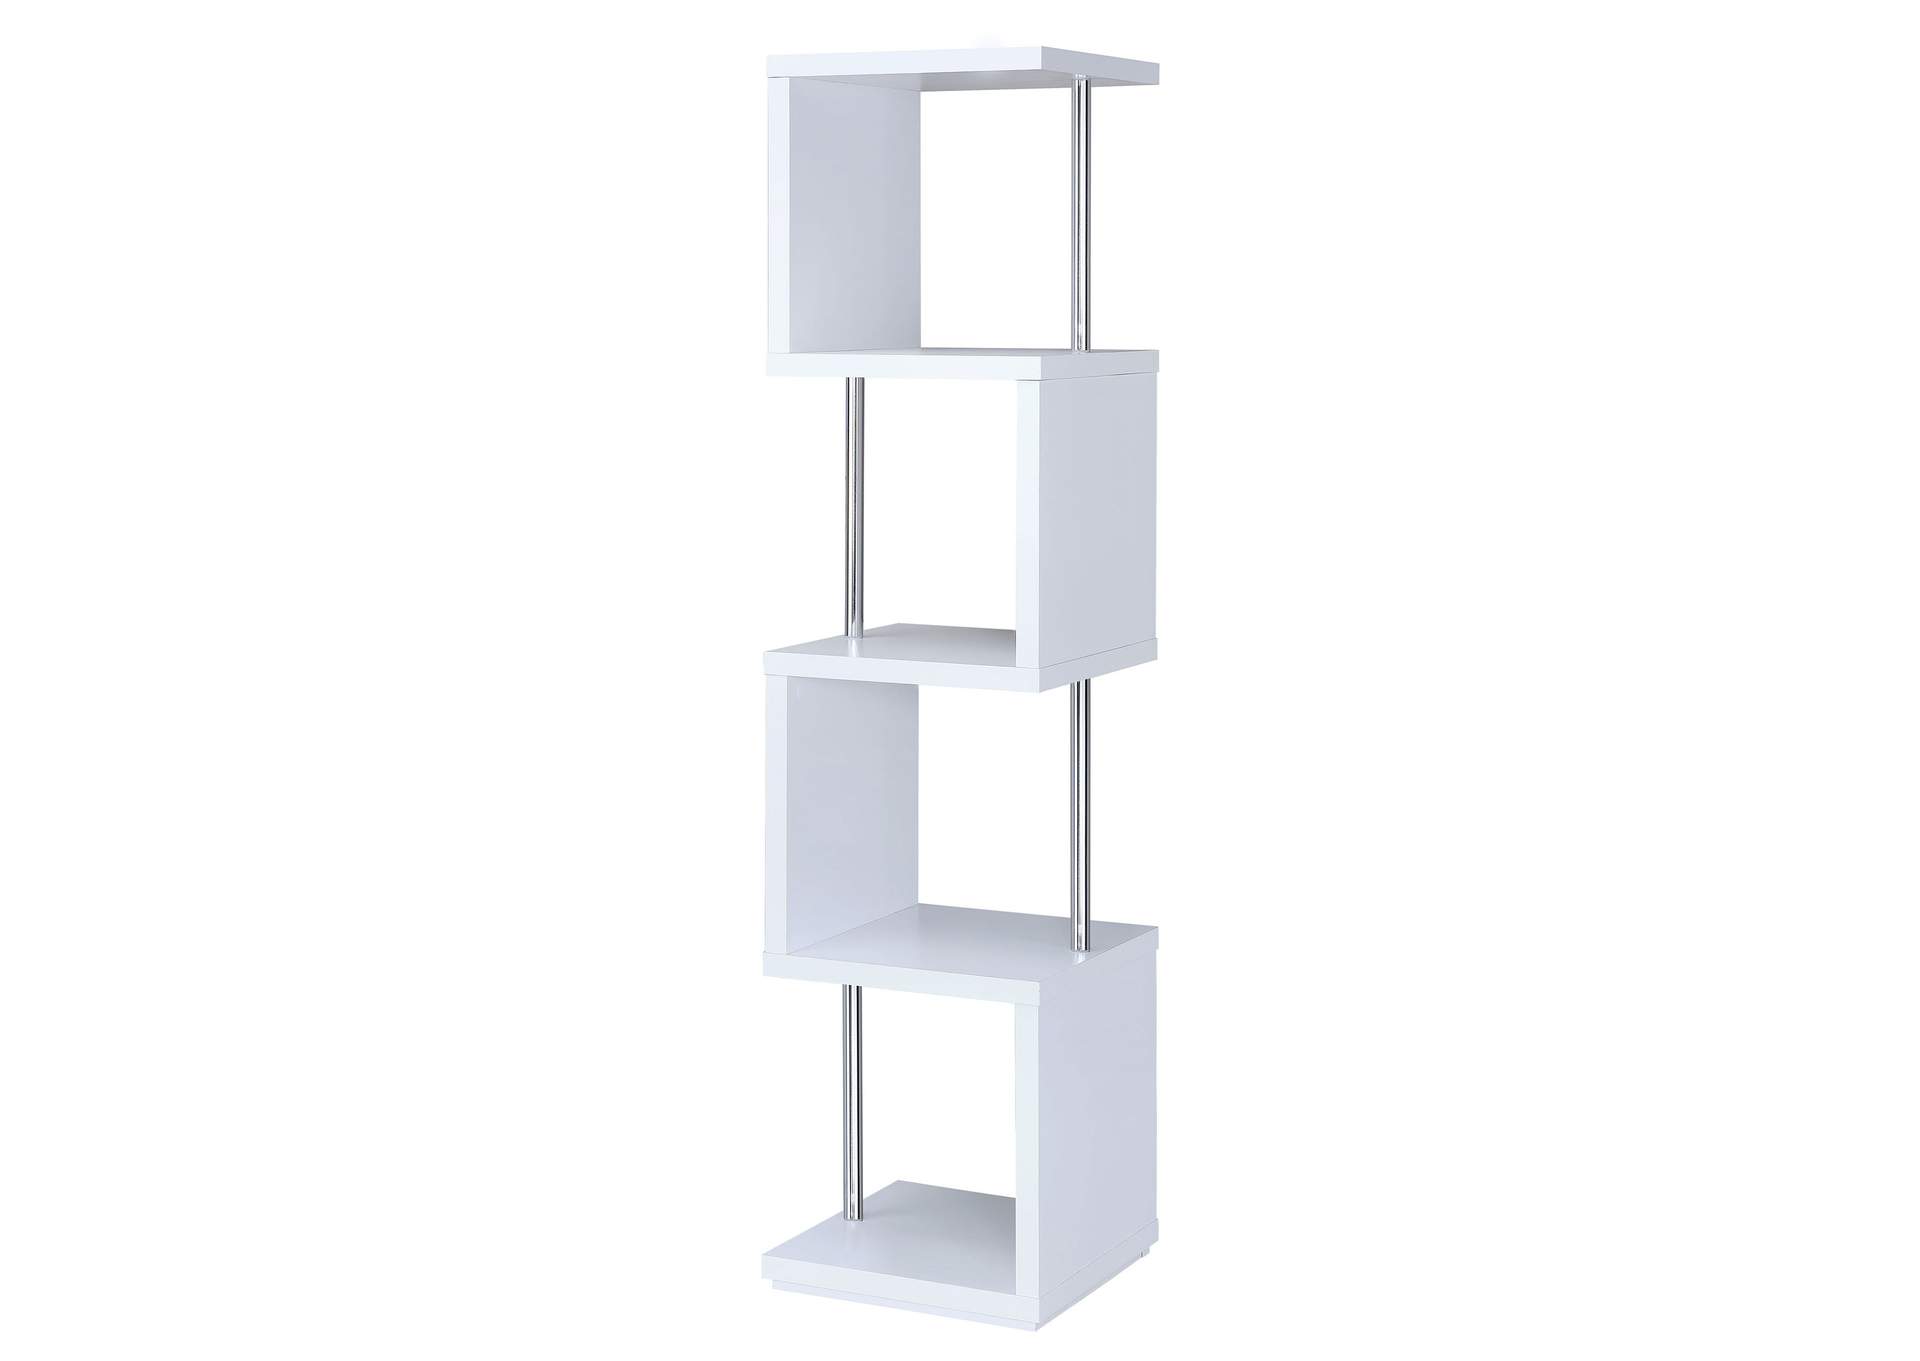 Baxter 4-shelf Bookcase White and Chrome,Coaster Furniture